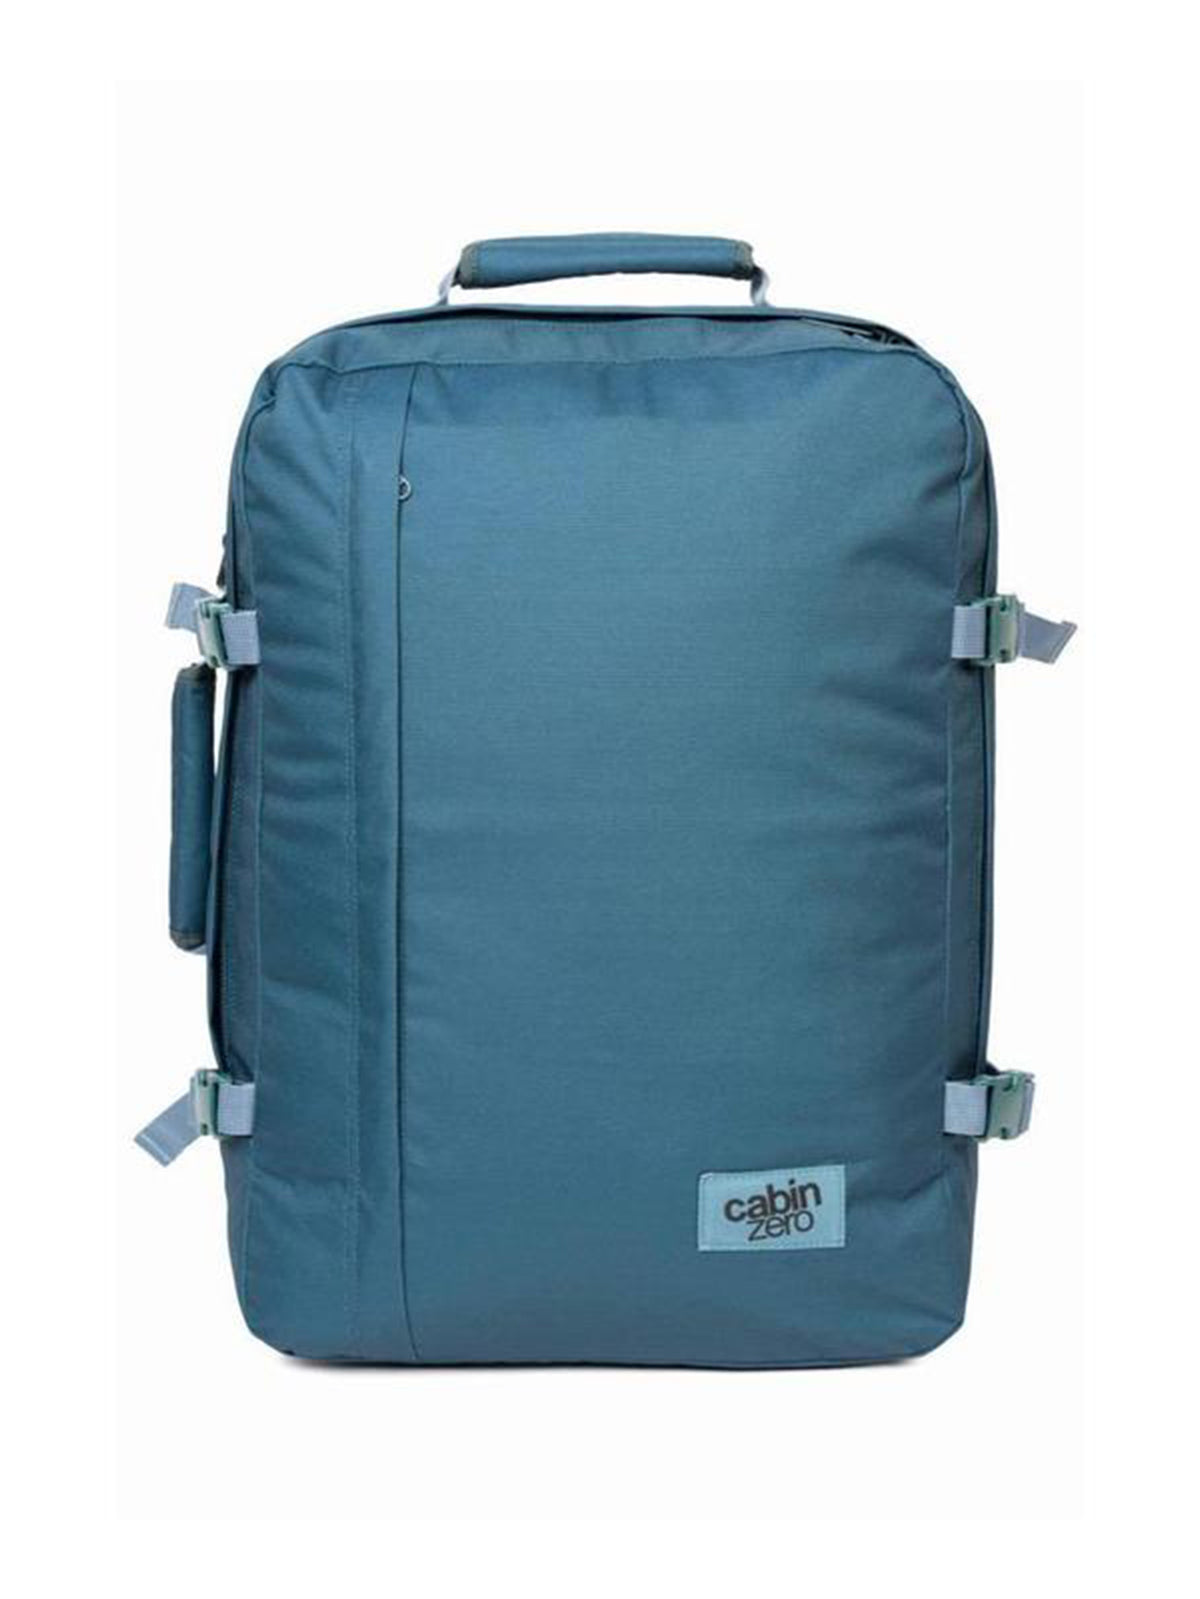 Cabinzero Classic 36L Ultra-Light Cabin Bag in Aruba Blue Color – THIS IS  FOR HIM